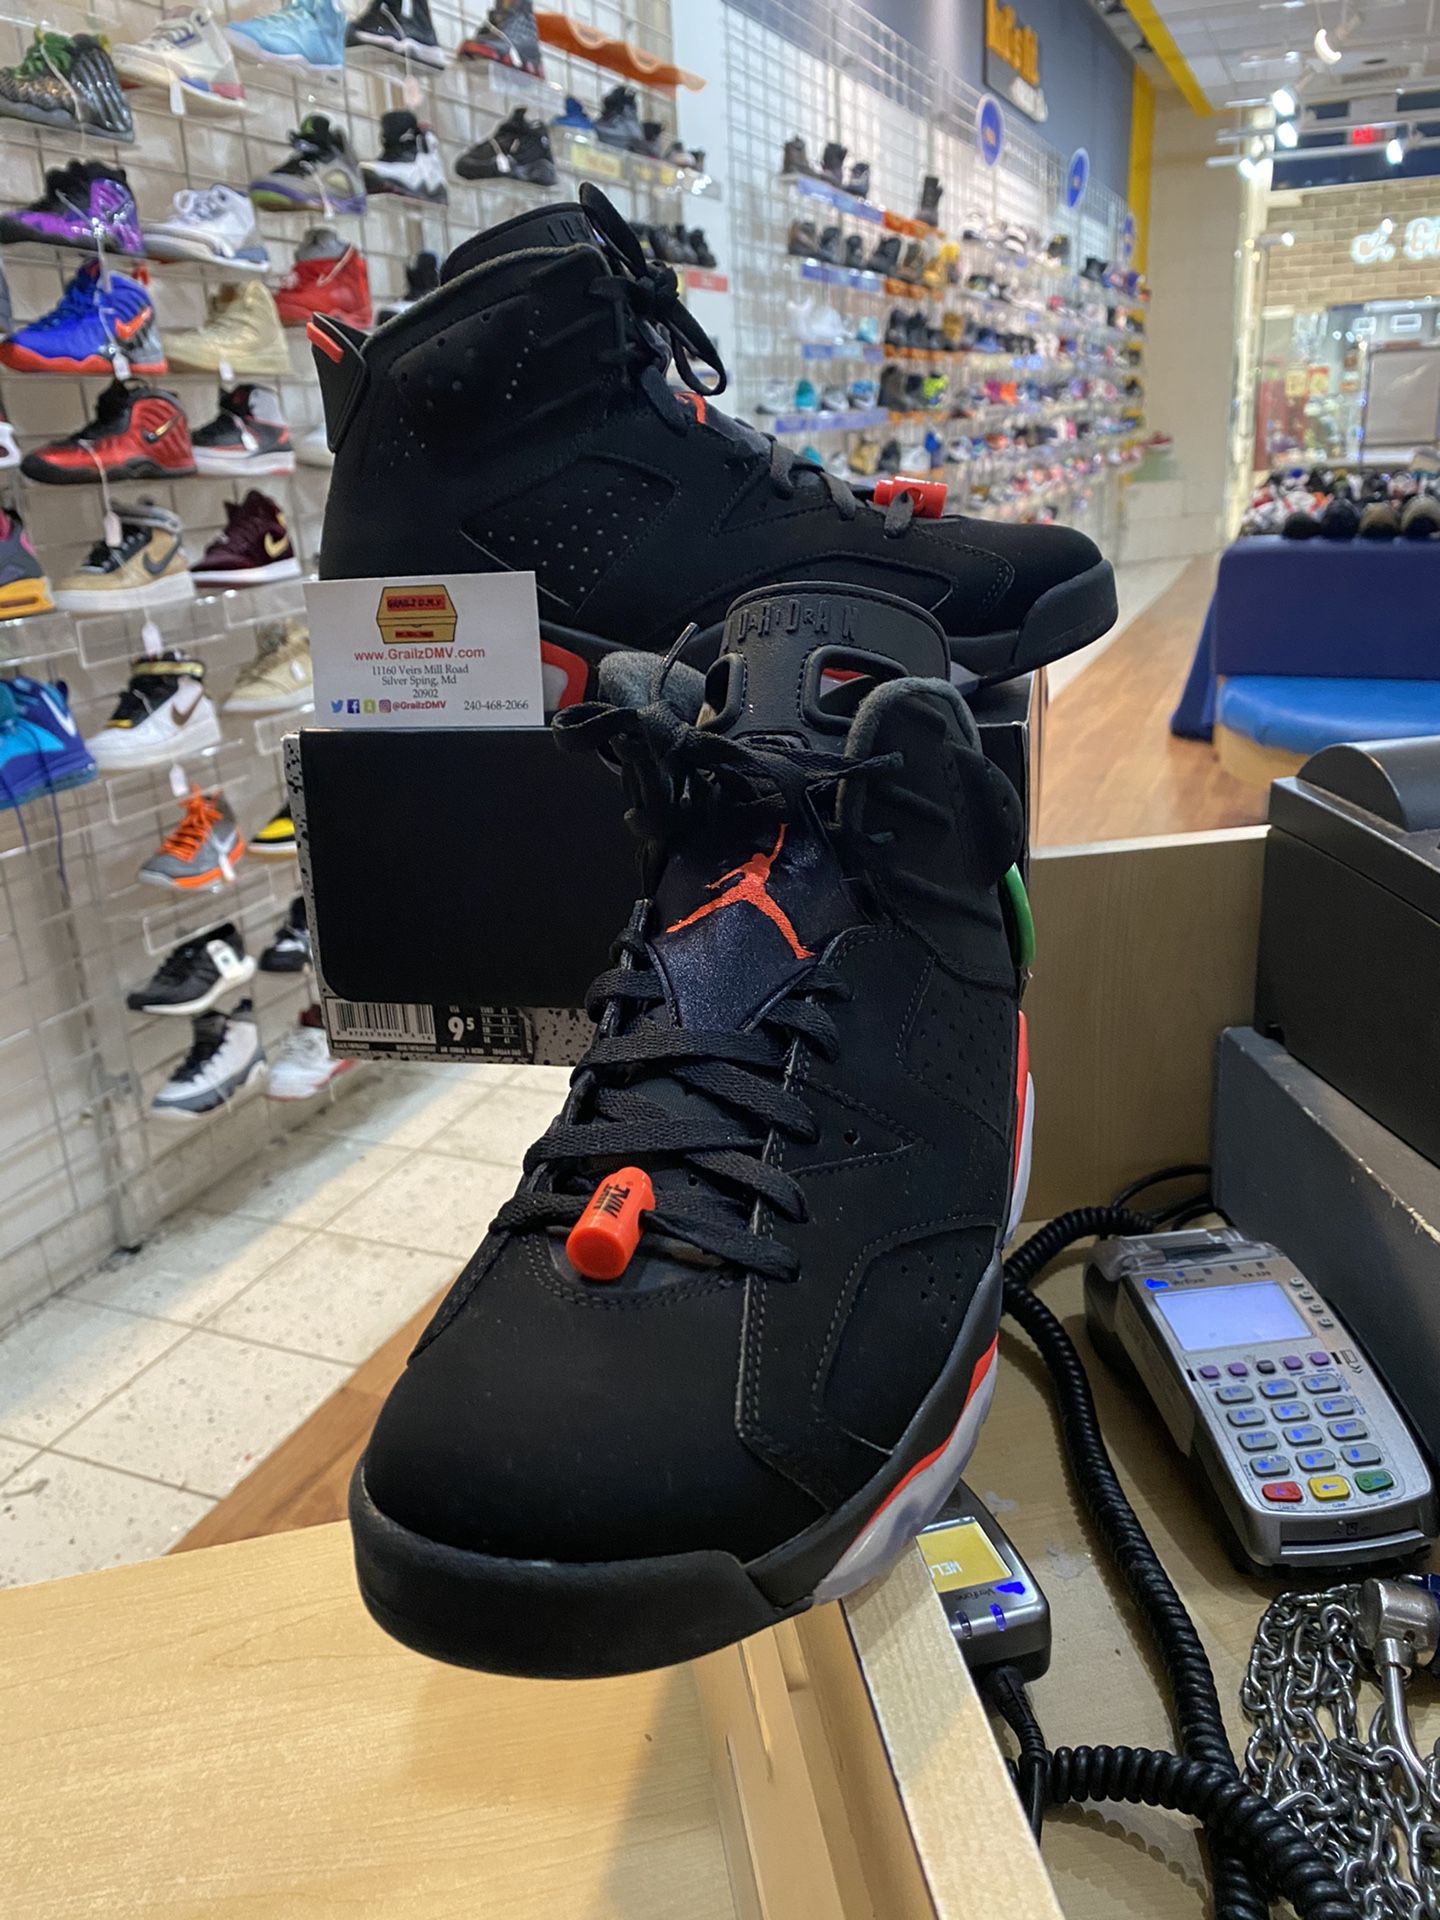 Brand New Air Jordan 6 Black Infrared 2019 Size 9.5